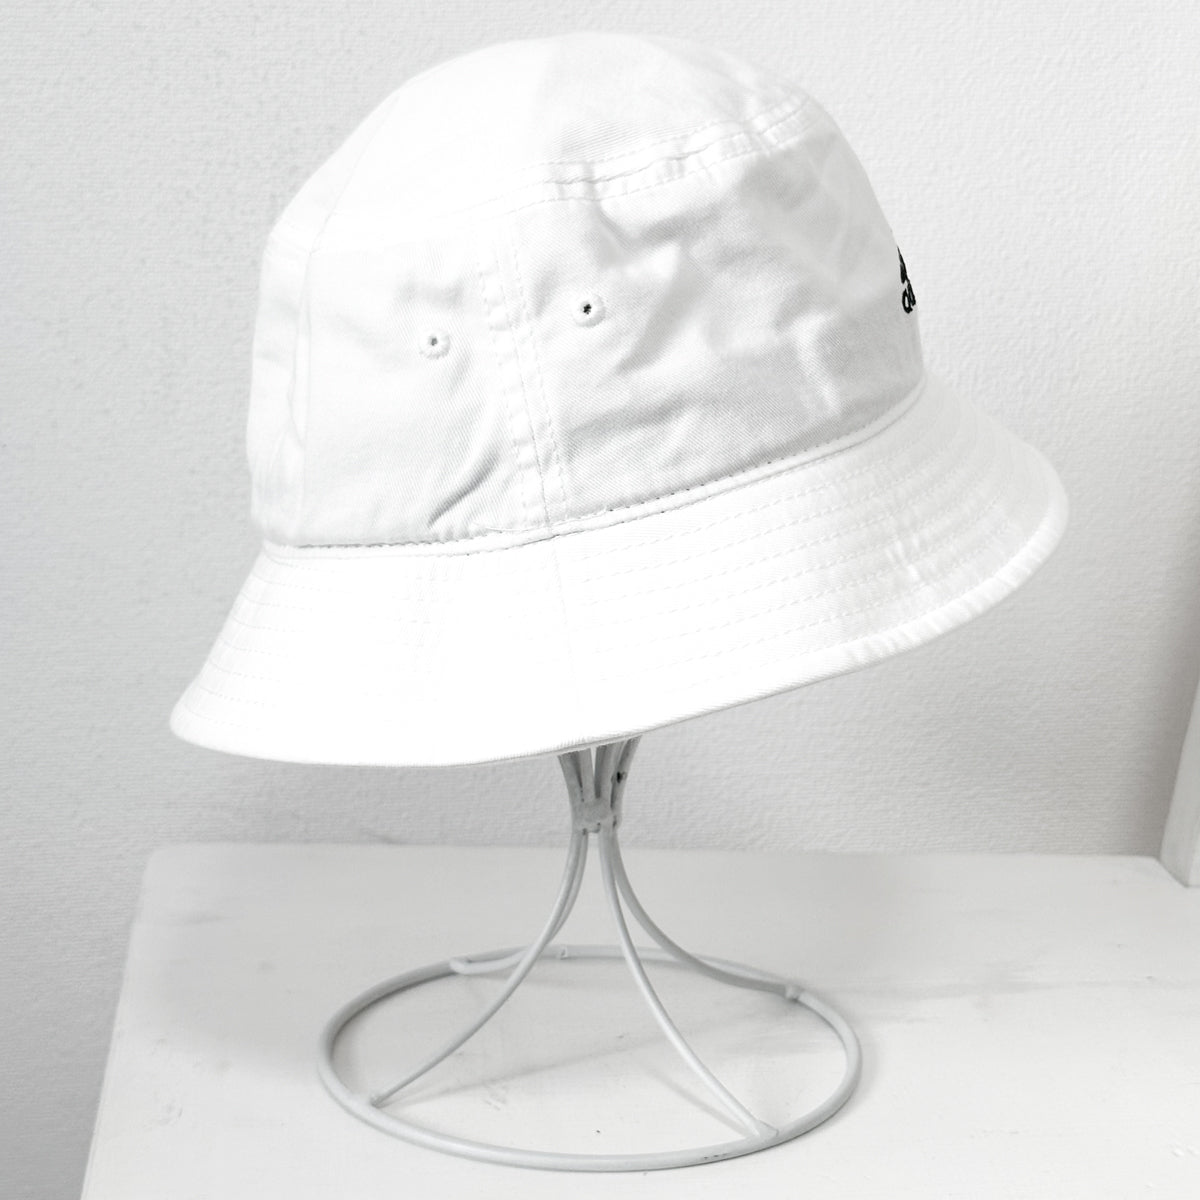 Adidas BOS OC Bucket Hat - YOUAREMYPOISON